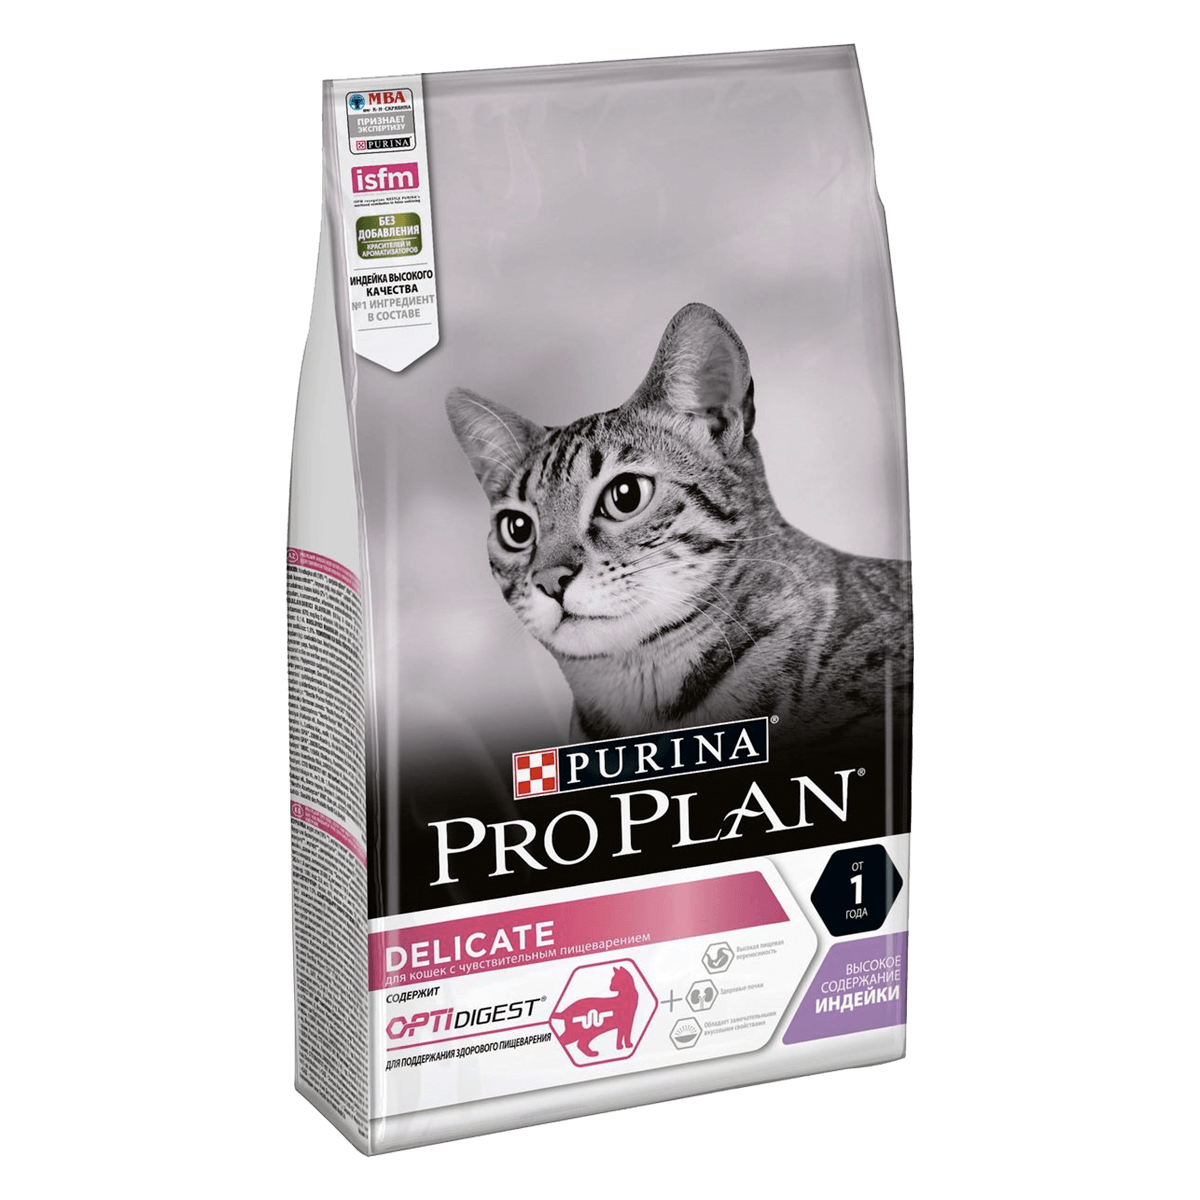 Purina Pro Plan Cat Adult Delicate Sensitive Turkey, 400 г - корм Пурина для кошек с проблемами пищеварения